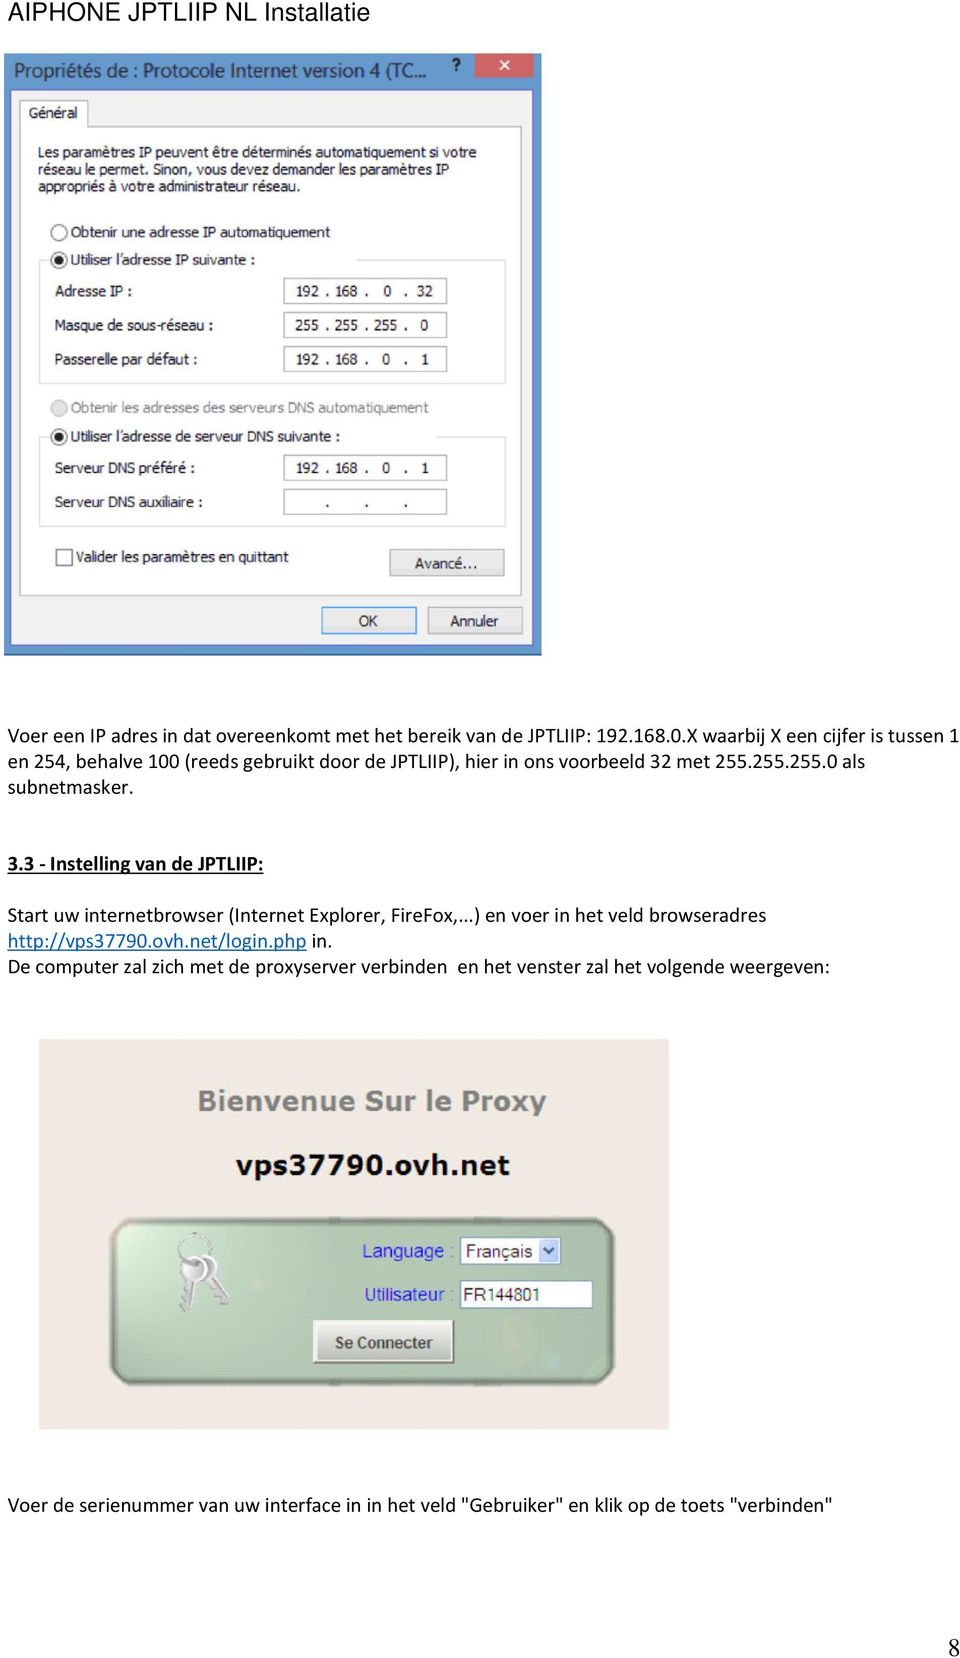 3.3 - Instelling van de JPTLIIP: Start uw internetbrowser (Internet Explorer, FireFox,...) en voer in het veld browseradres http://vps37790.ovh.